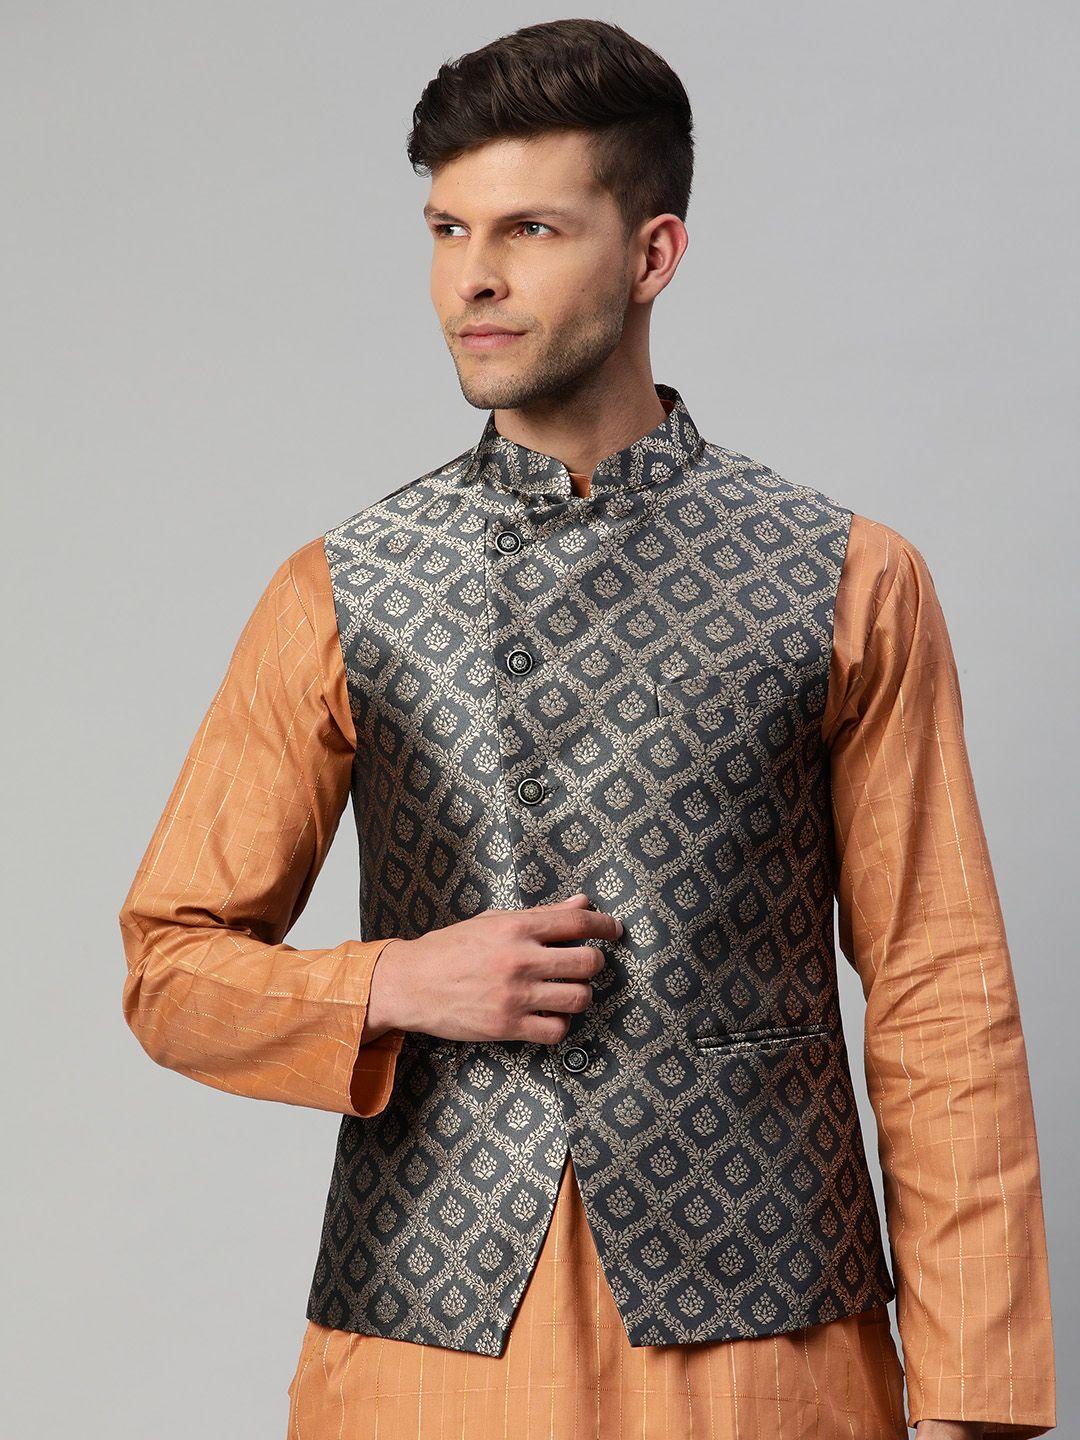 manq-men-charcoal-grey-&-gold-ethnic-motifs-jaquard-woven-design-nehru-jacket